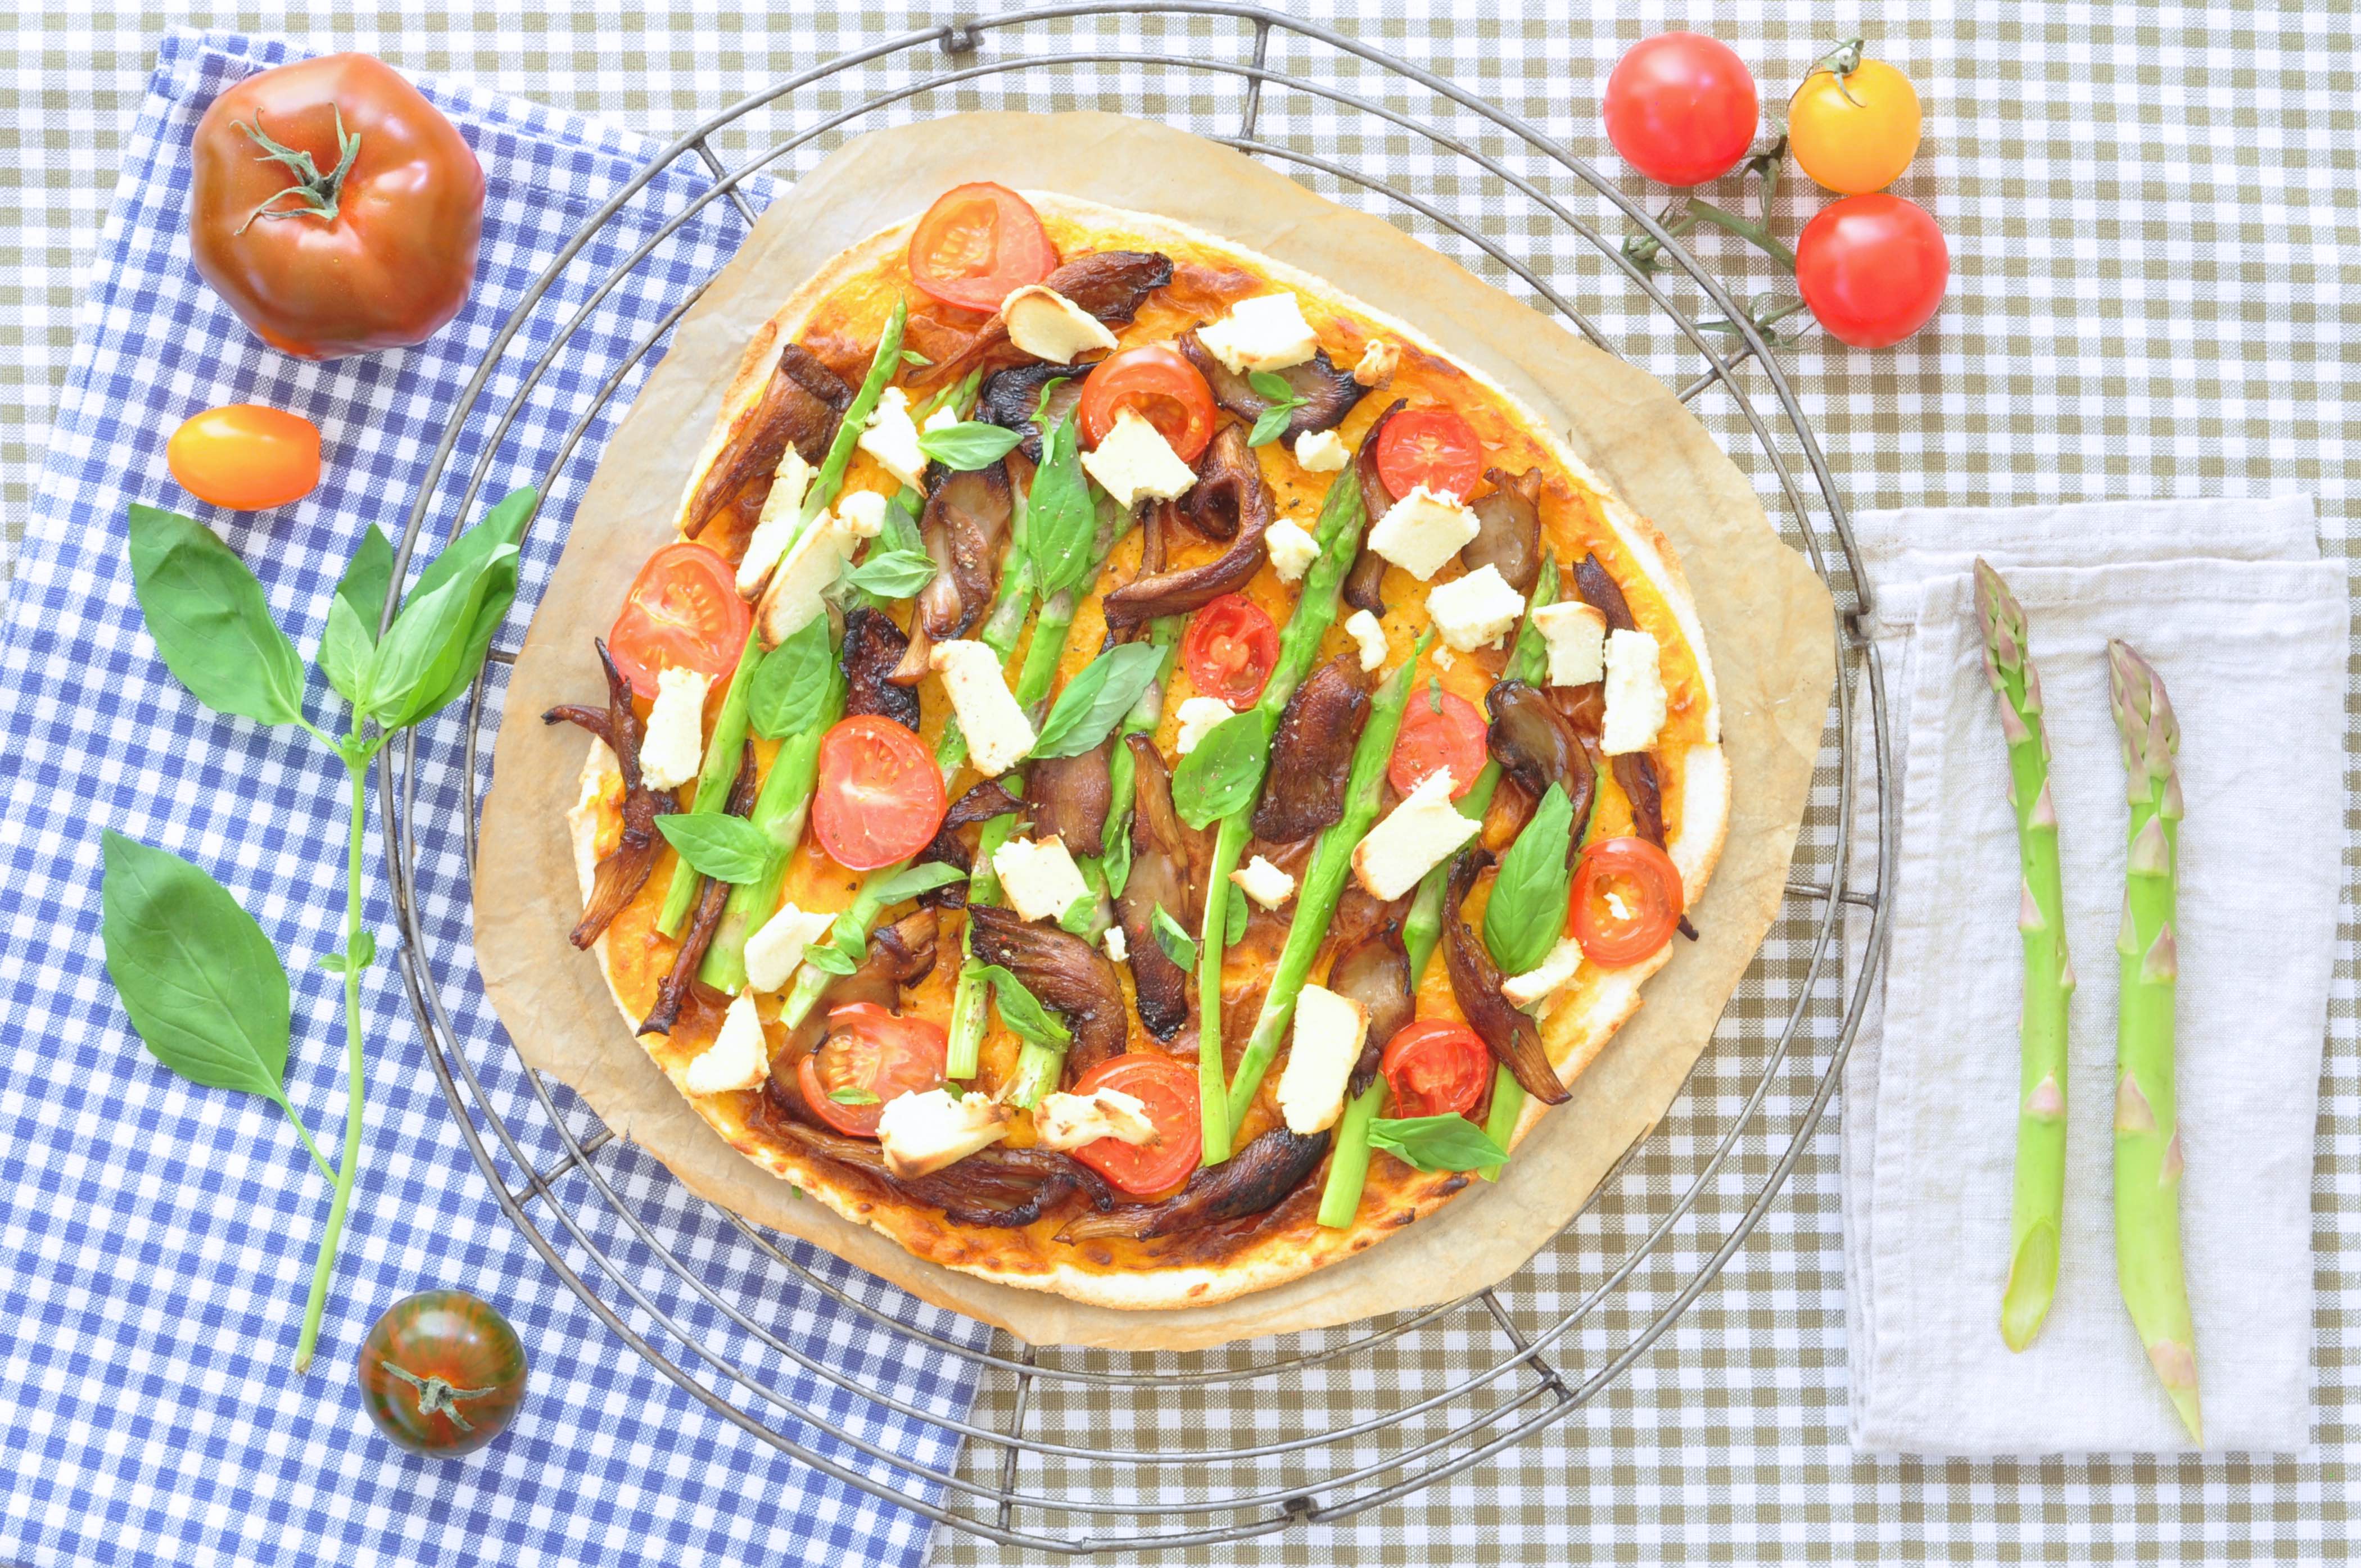 Cassava_pizza_with_cheese_sauce_and_veggies